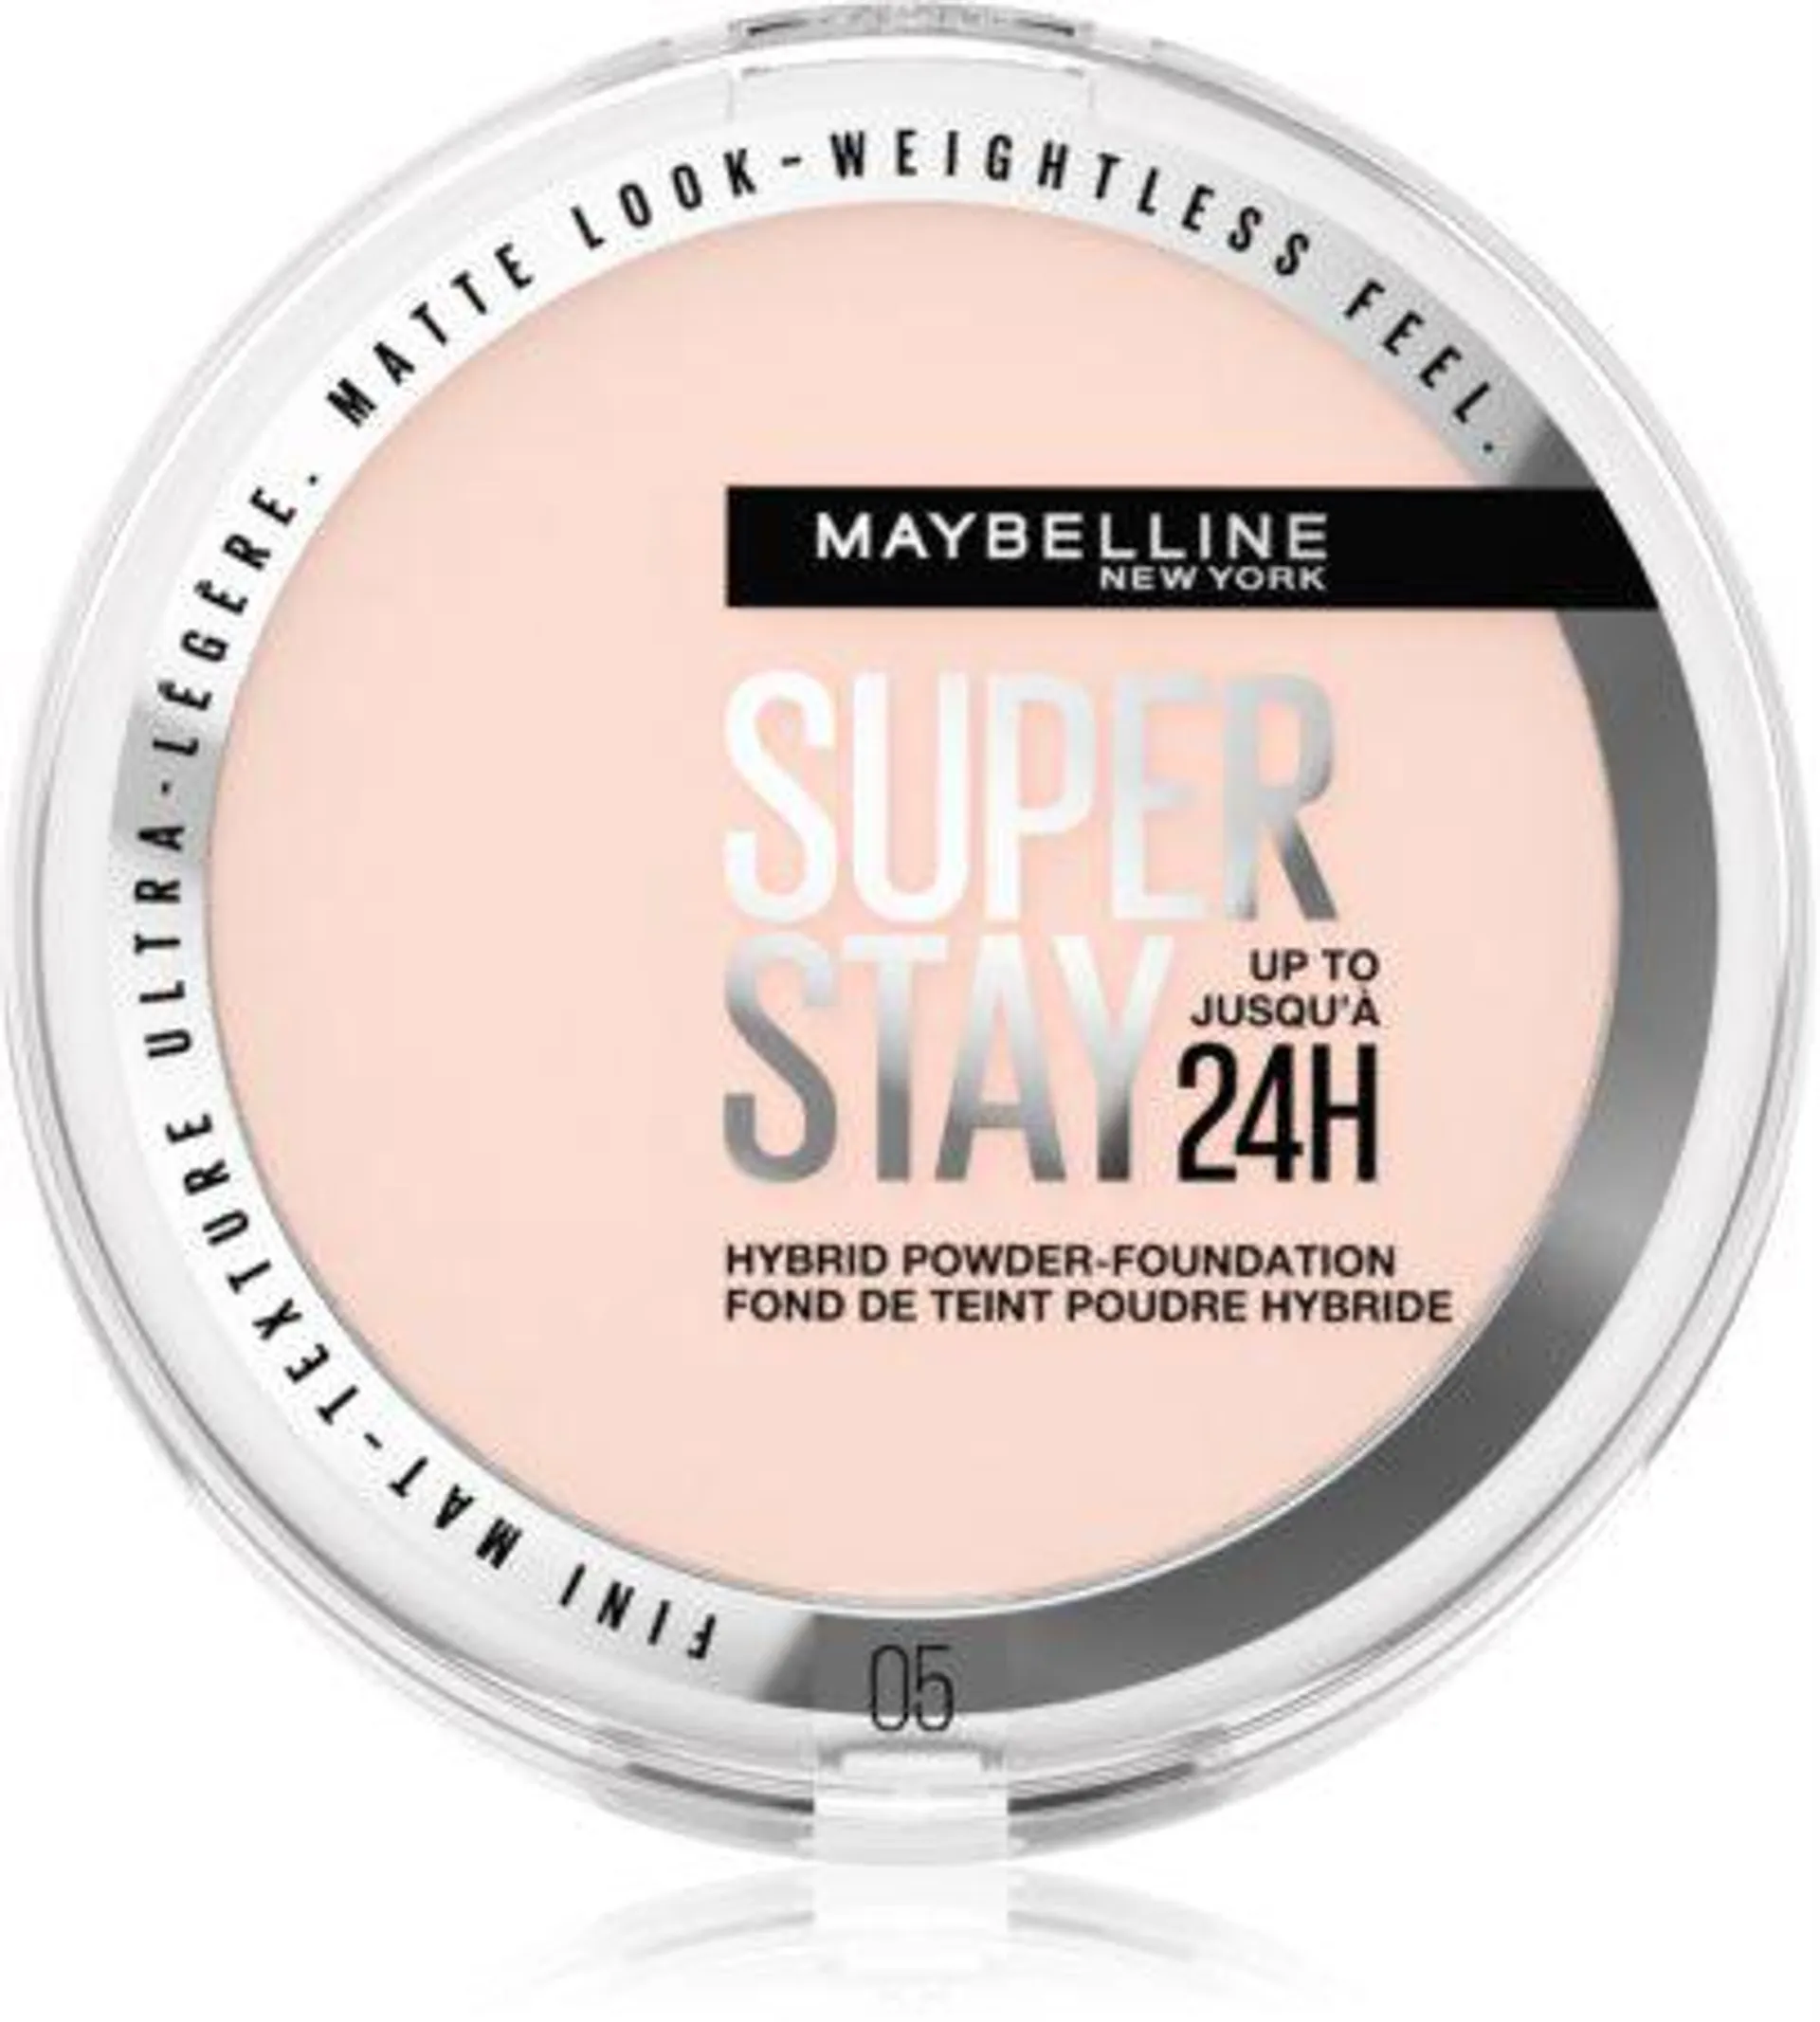 SuperStay 24H Hybrid Powder-Foundation